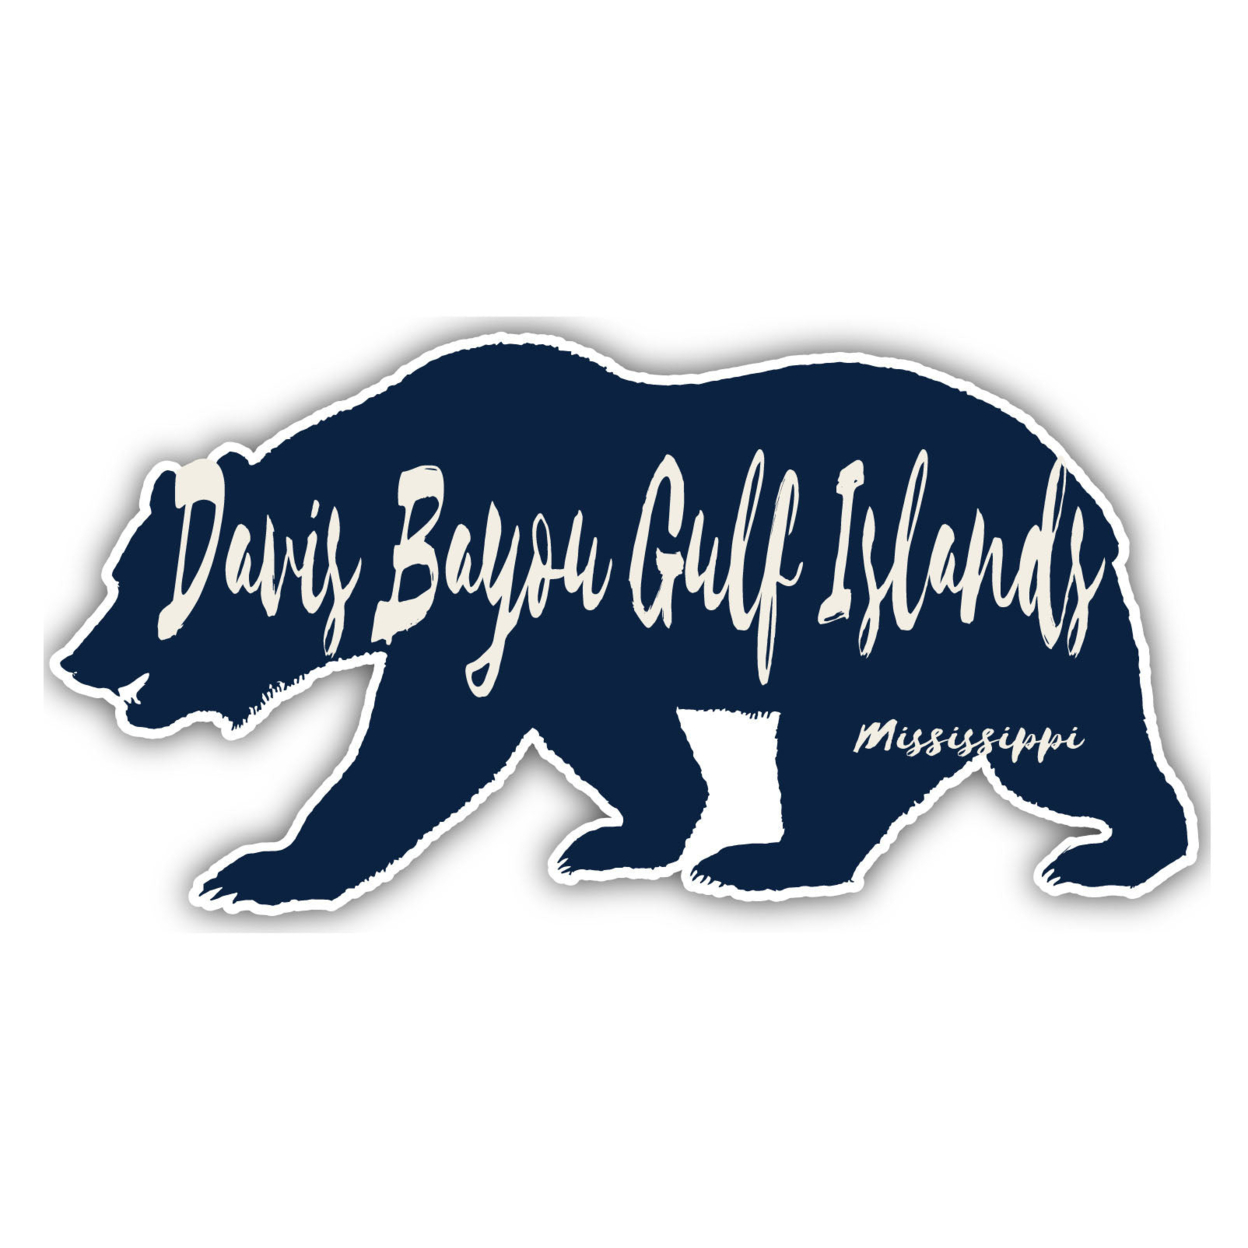 Davis Bayou Gulf Islands Mississippi Souvenir Decorative Stickers (Choose Theme And Size) - 4-Pack, 6-Inch, Bear